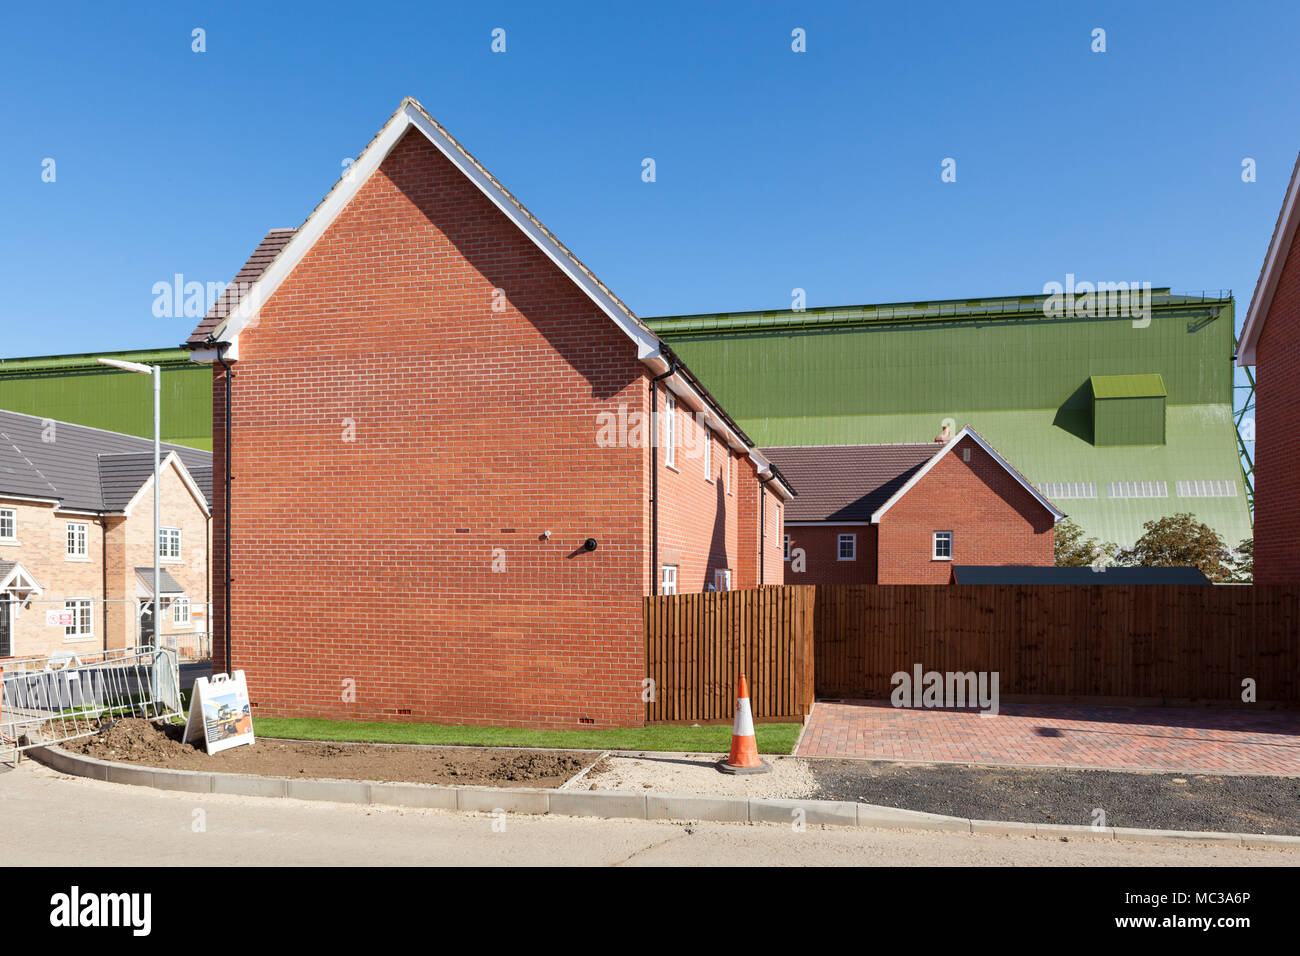 New build estate with Cardington airship hanger behind, Bedford, UK Stock Photo